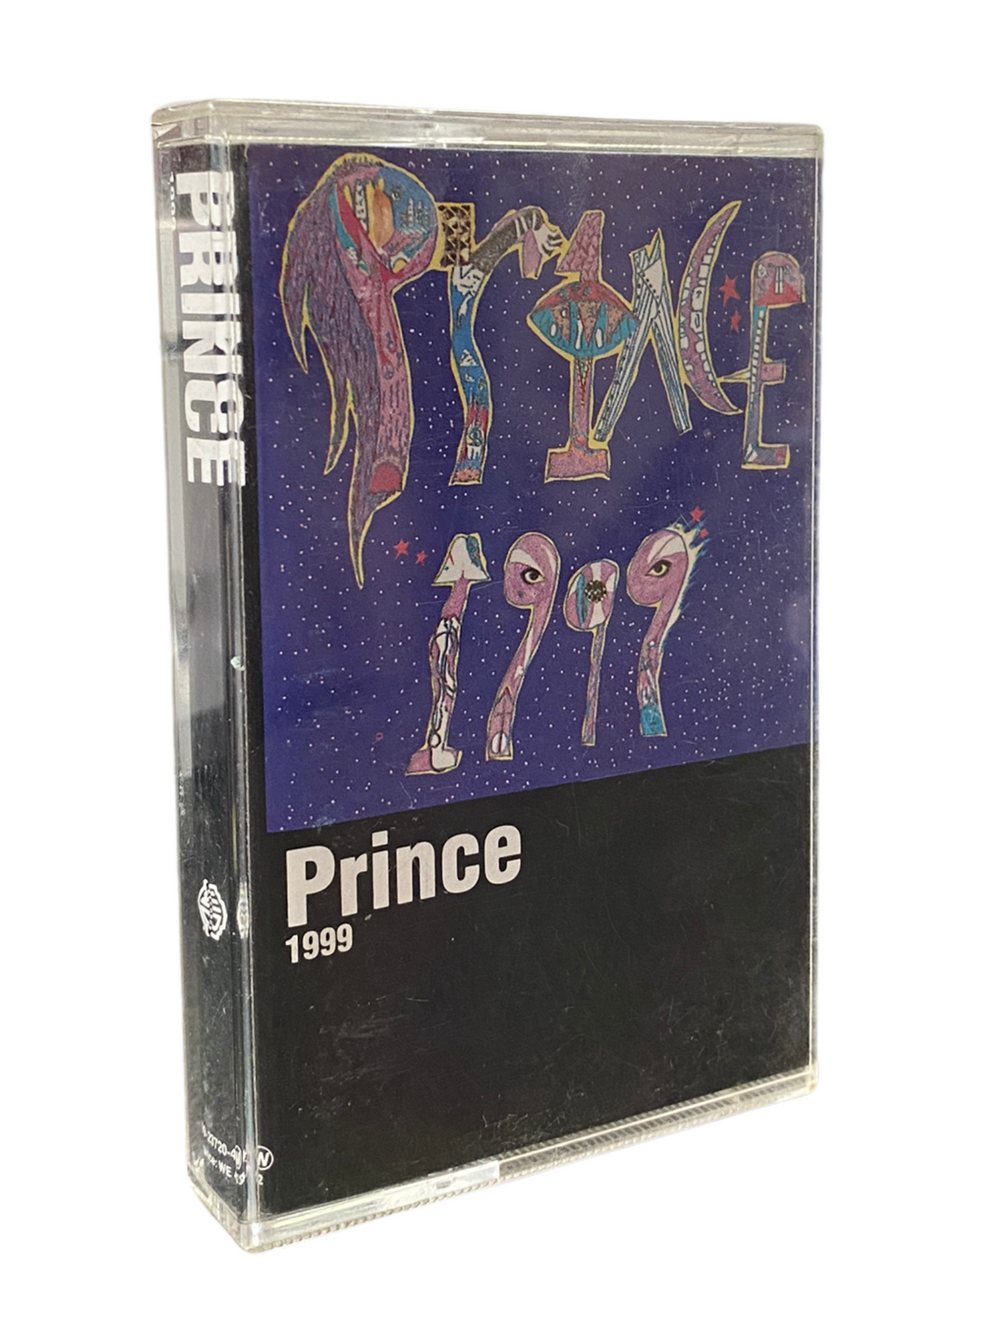 Prince – 1999 Original Tape Cassette Album 1982 Release